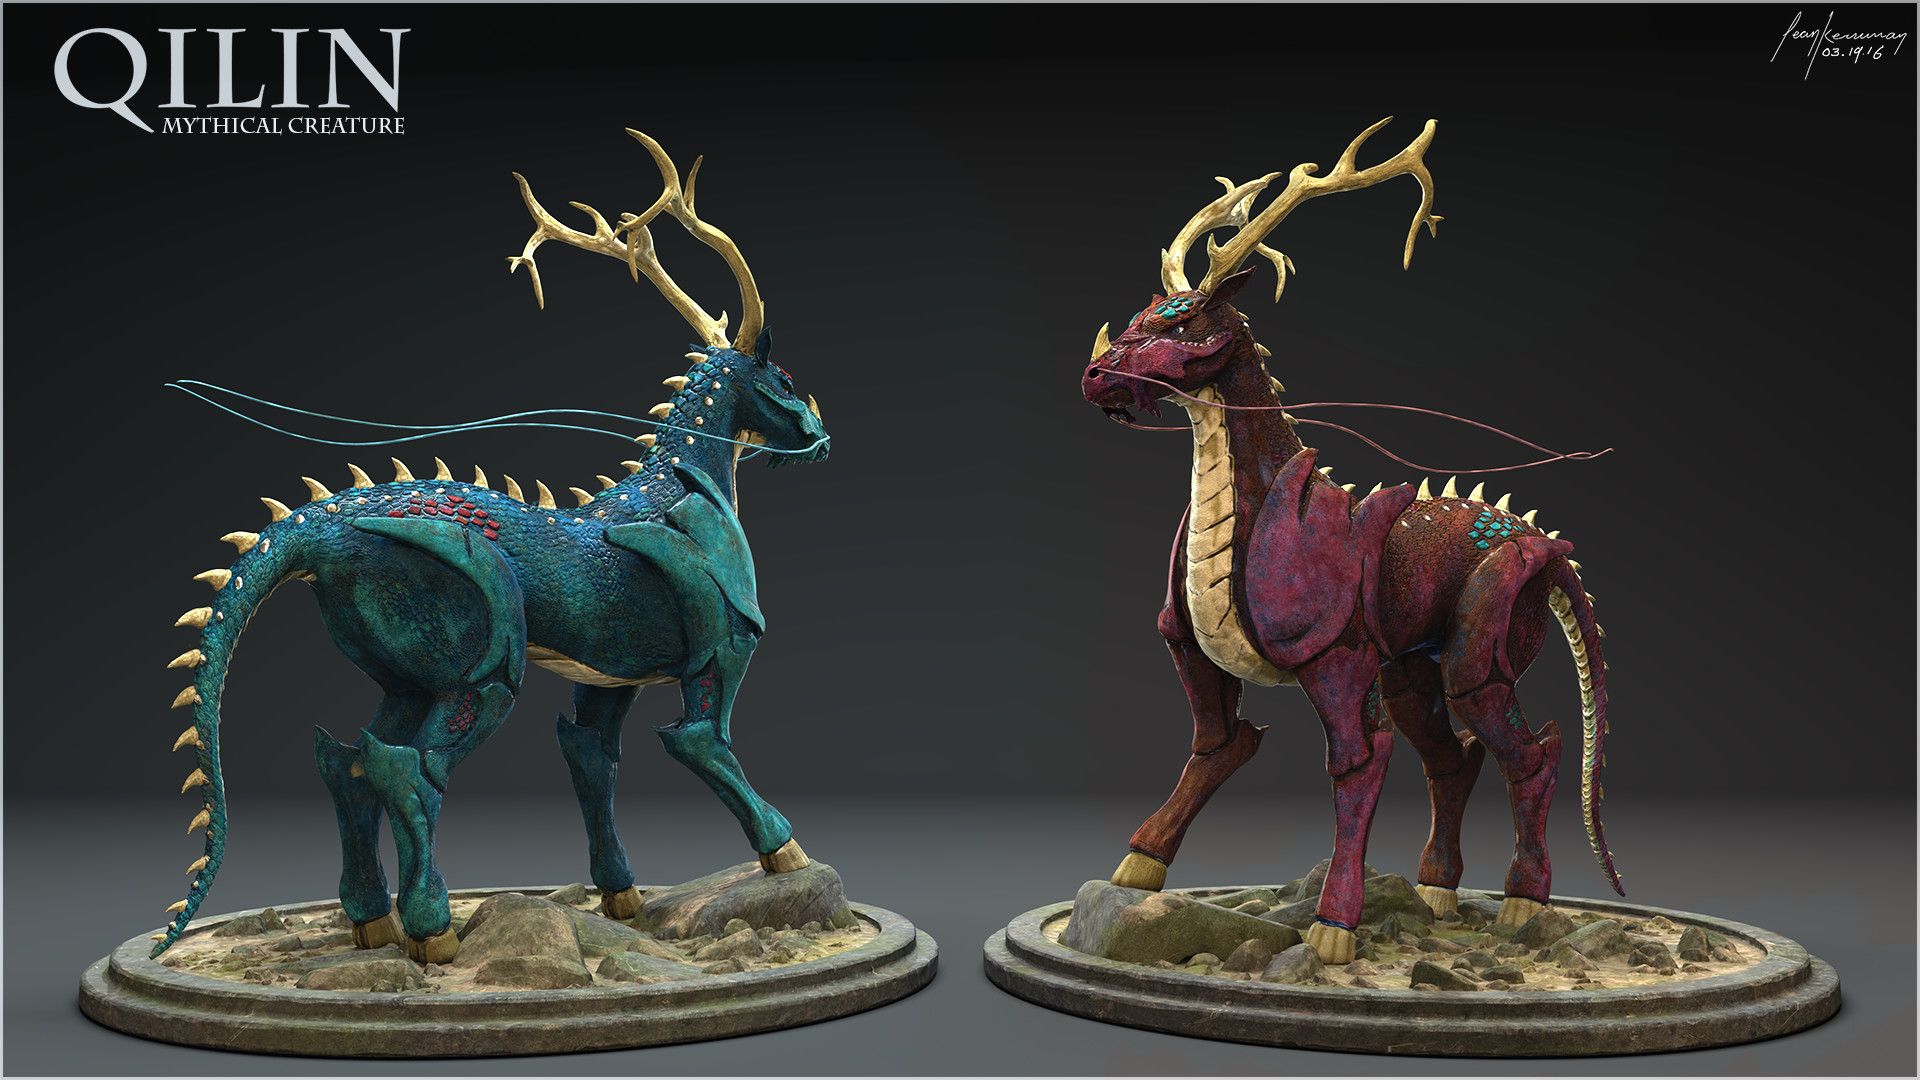 Qilin mythical Beast Sculpt, Sean Kernerman. Mythical beast, Mythical creatures, Mythological creatures